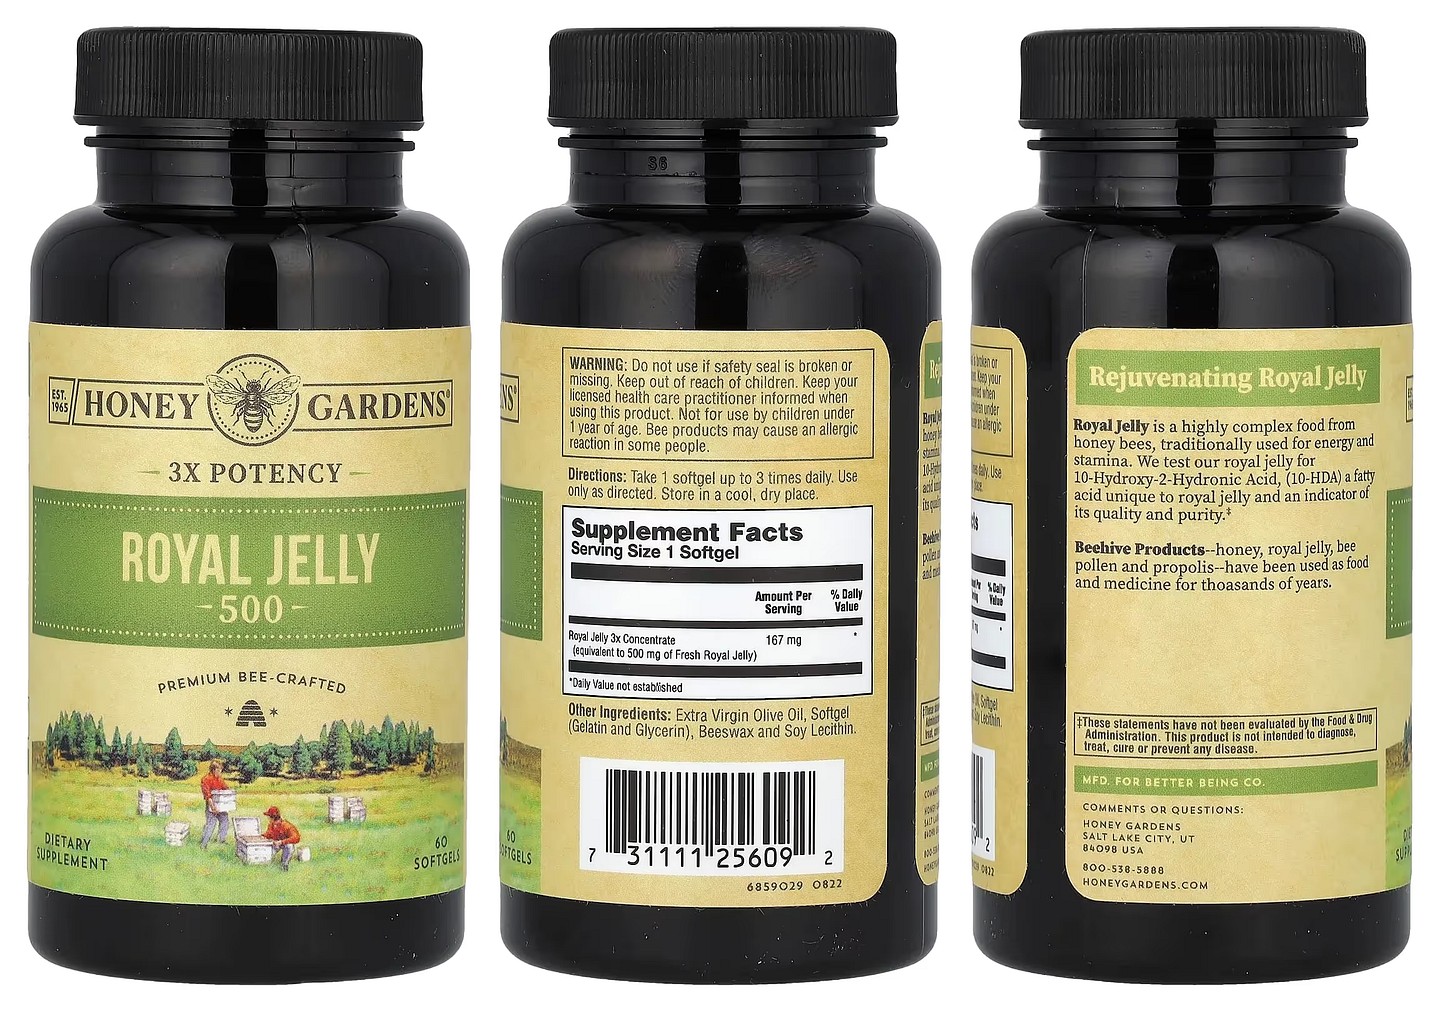 Honey Gardens, Royal Jelly 500 packaging